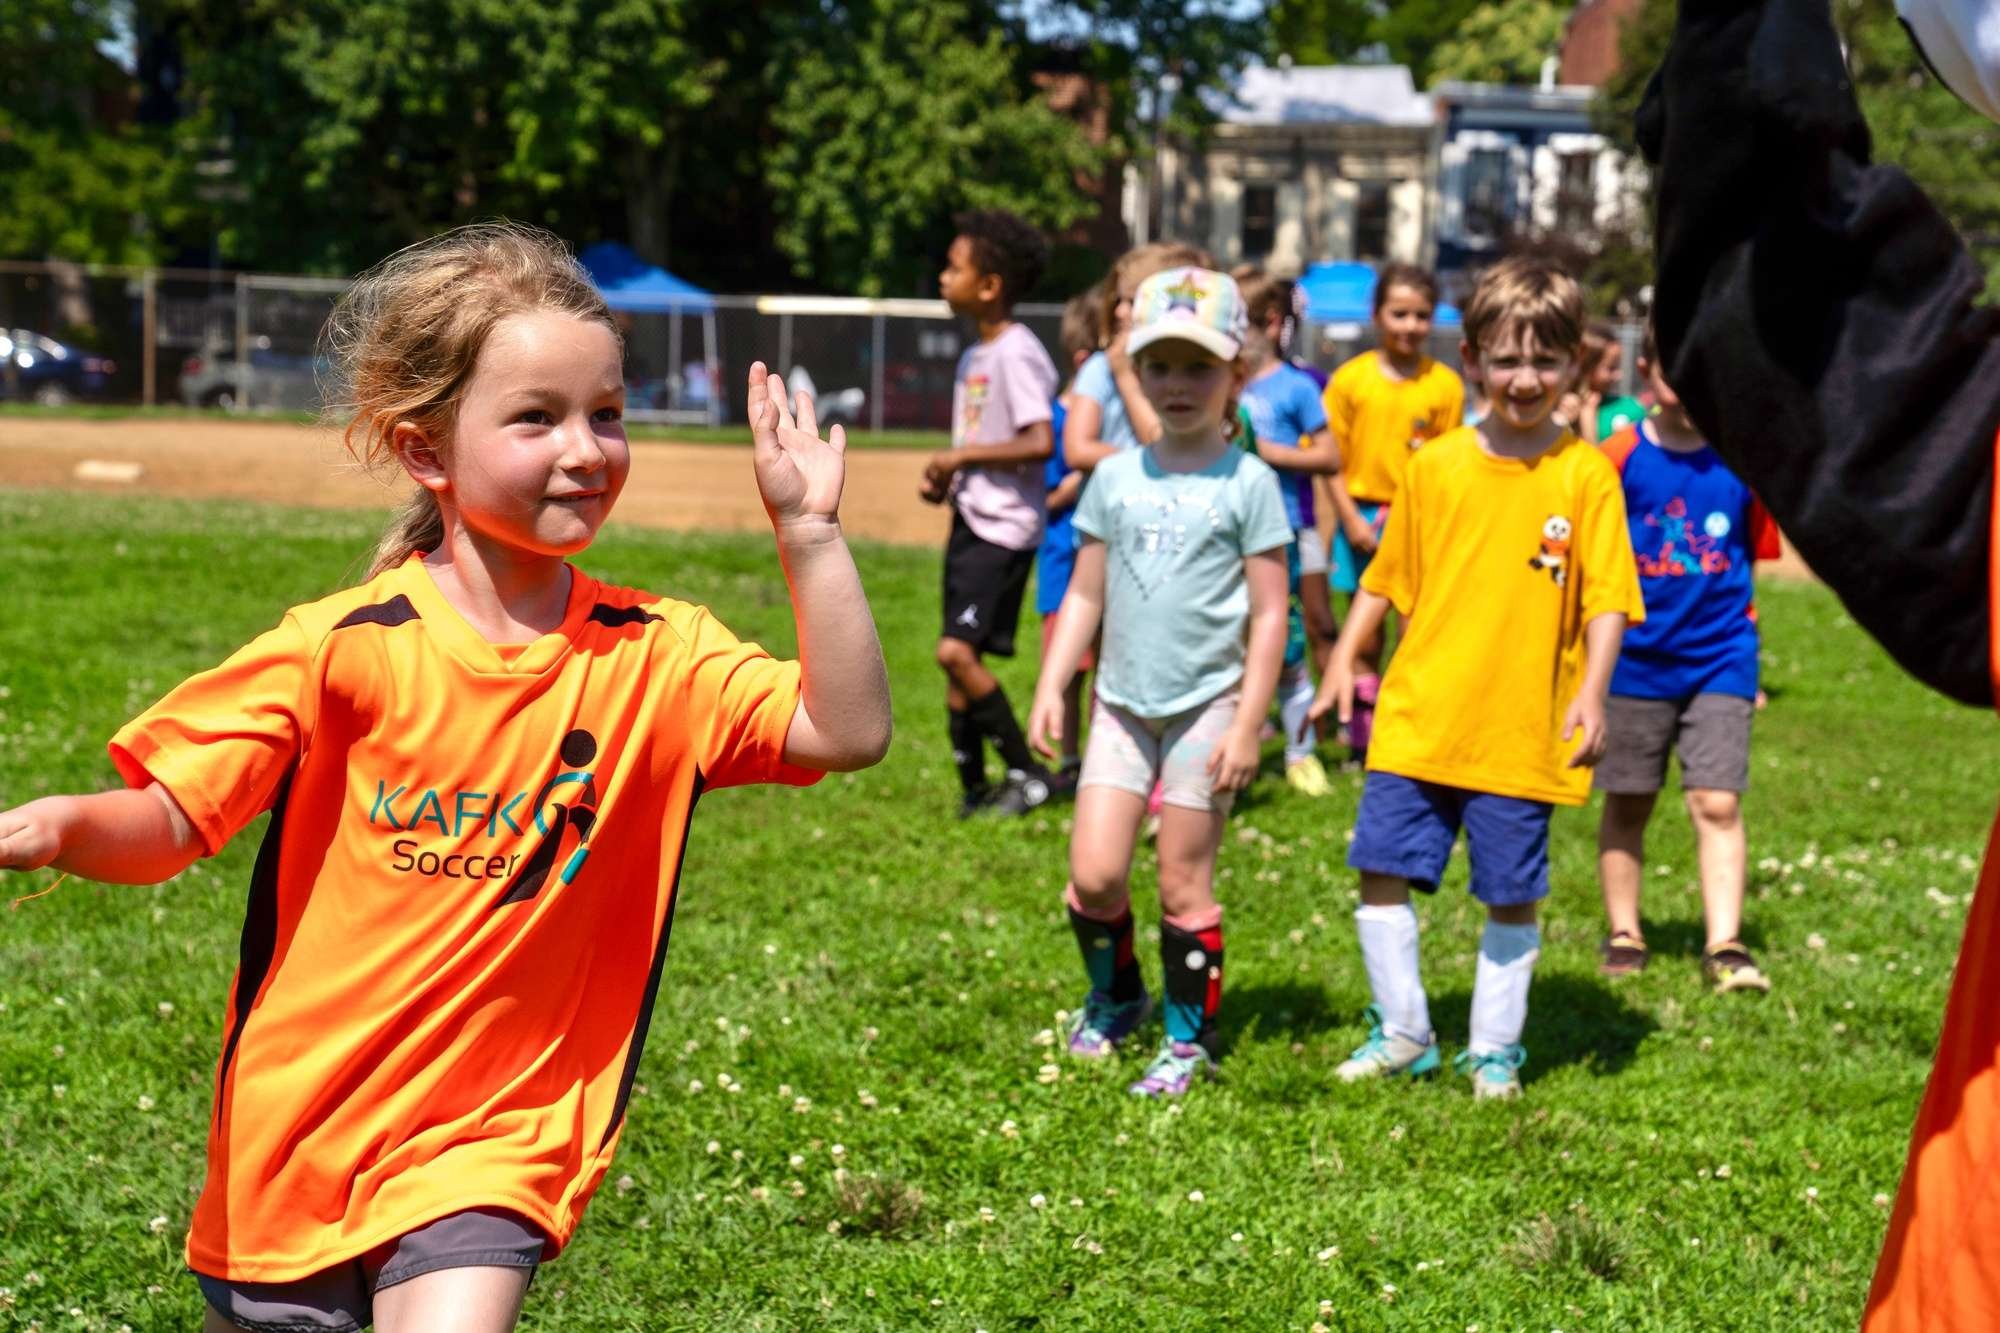 Dc-way-soccer-club-for-kids-in-washington-dc-summer-camp-at-tyler-elementary-school- 0195.jpg